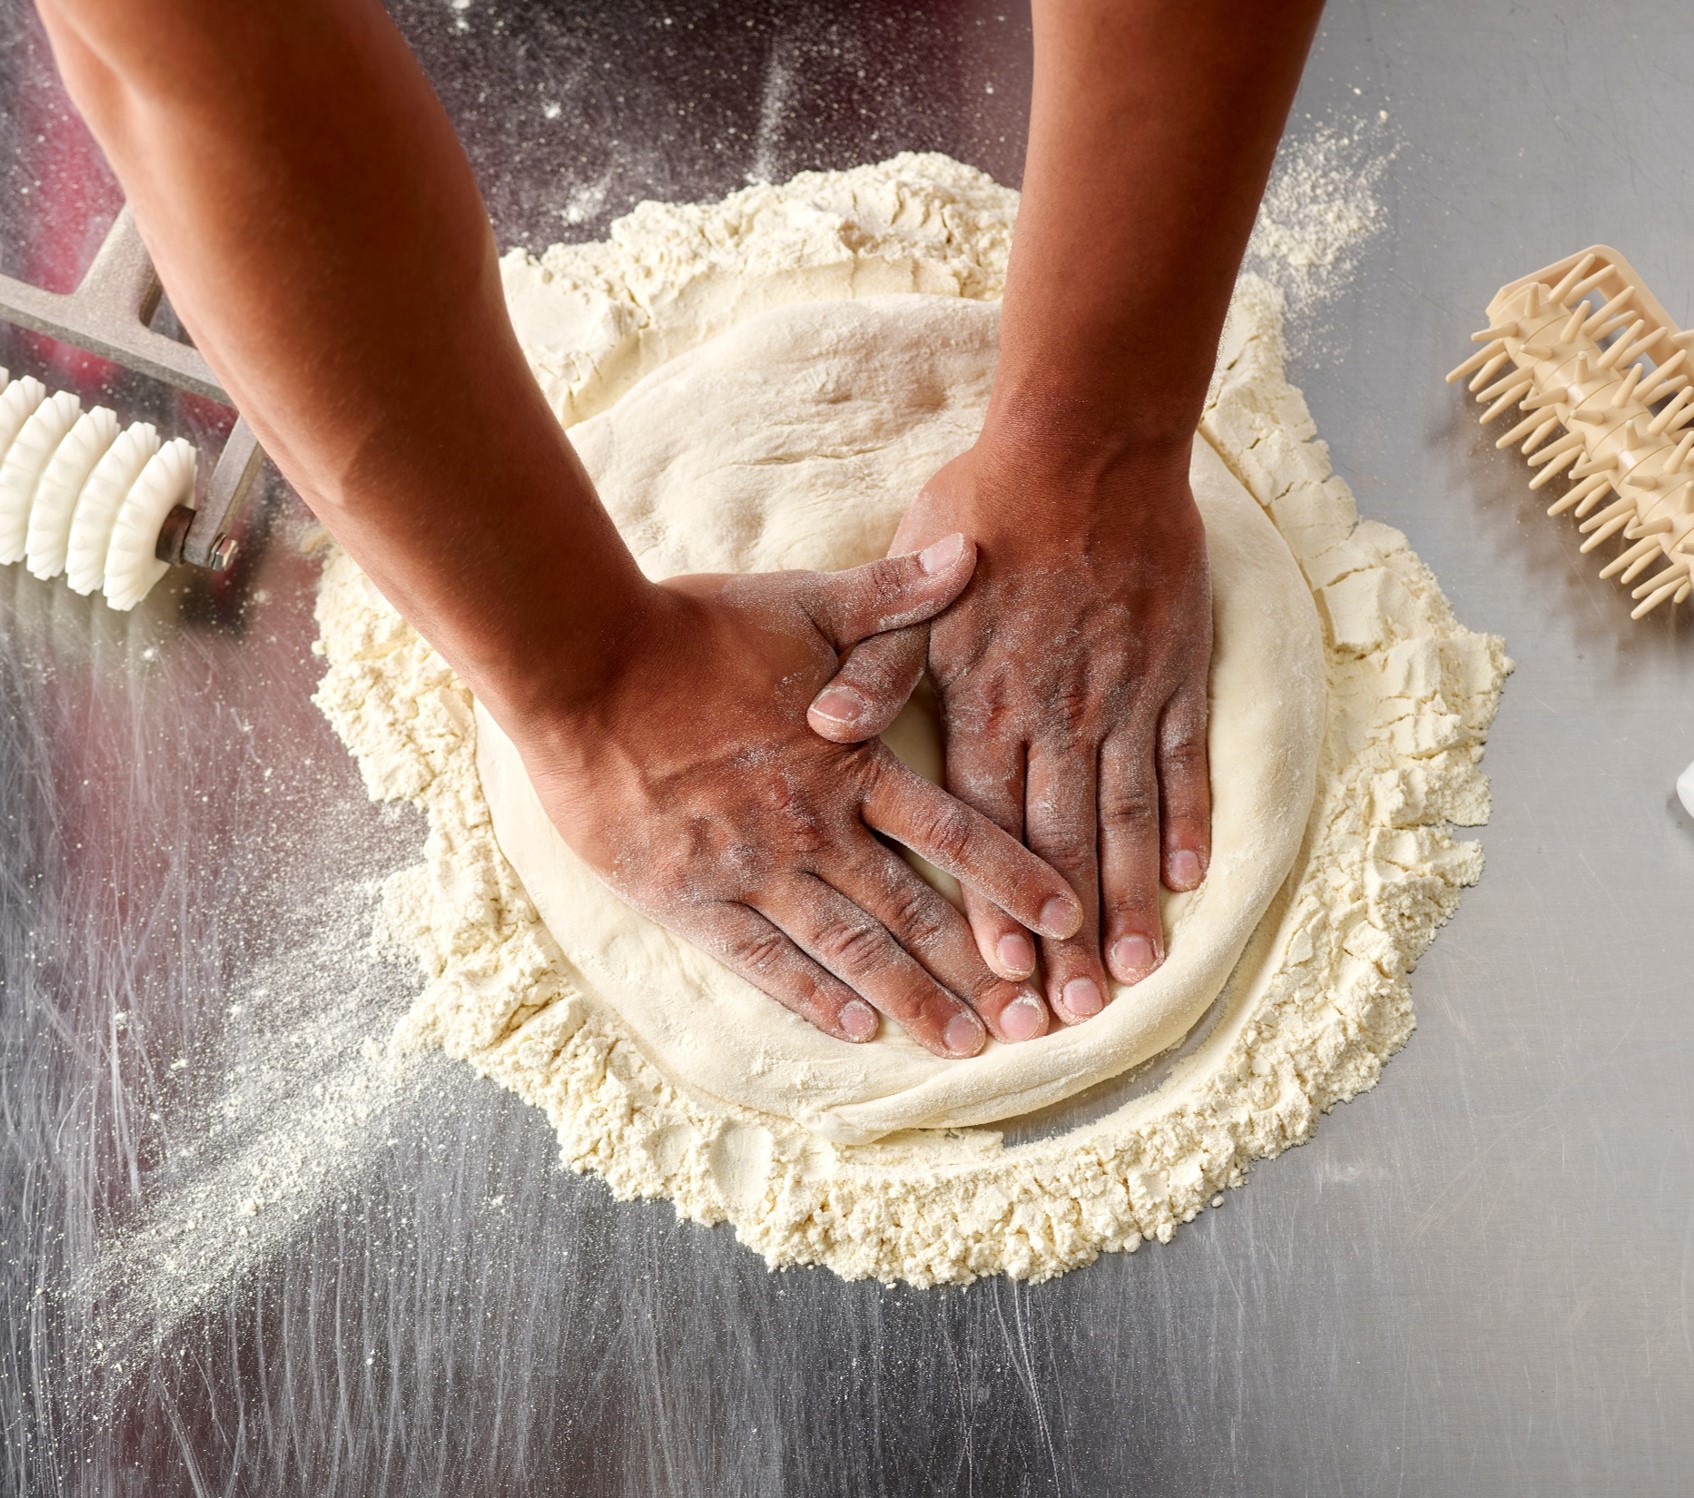 Papa Johns team members rolling dough